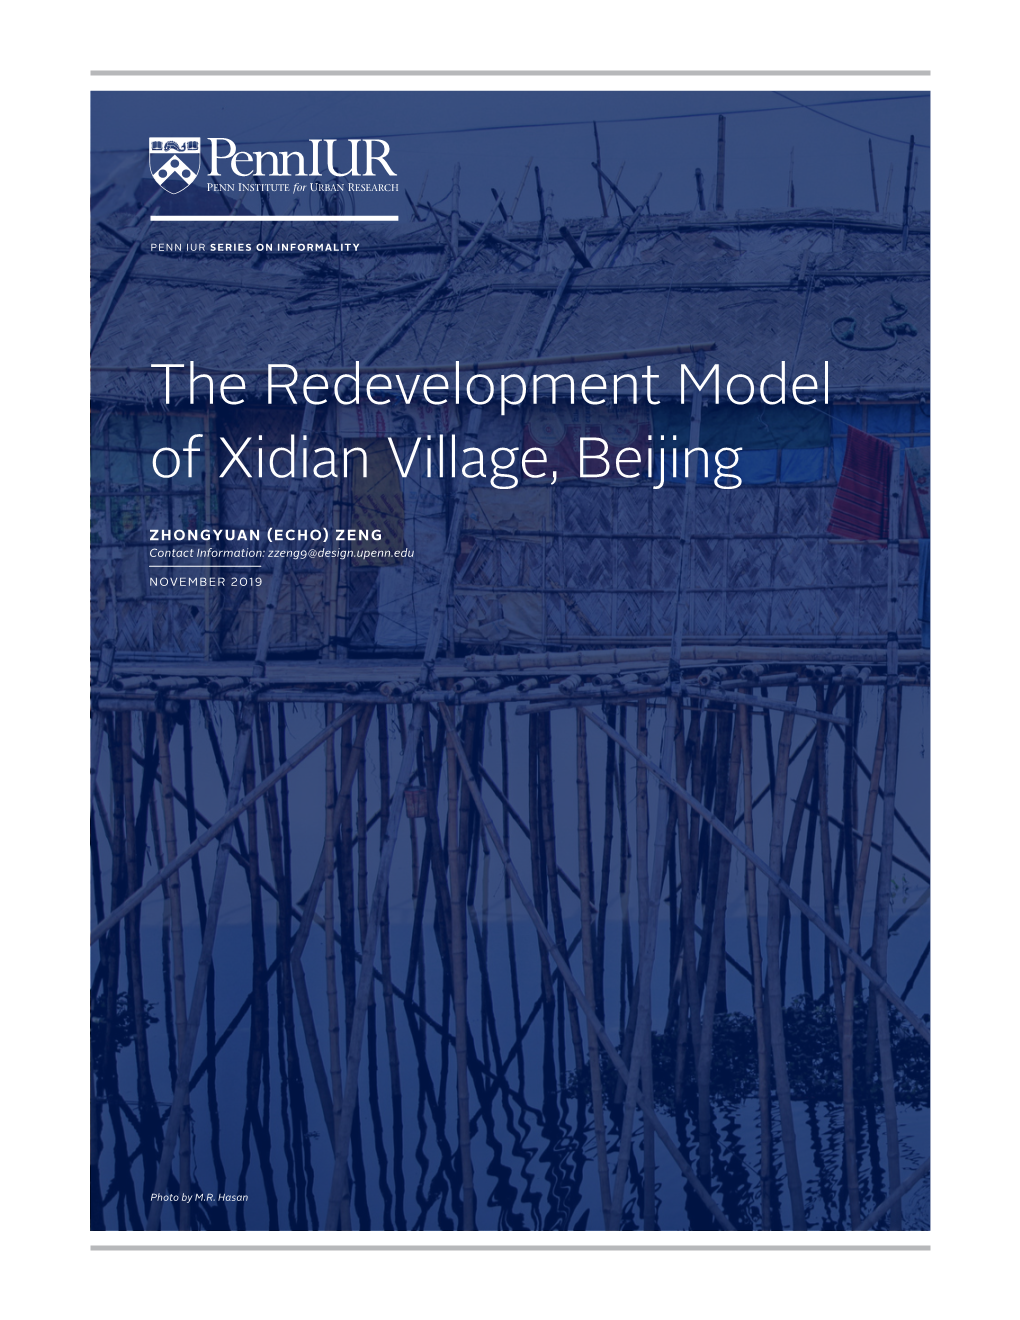 The Redevelopment Model of Xidian Village, Beijing